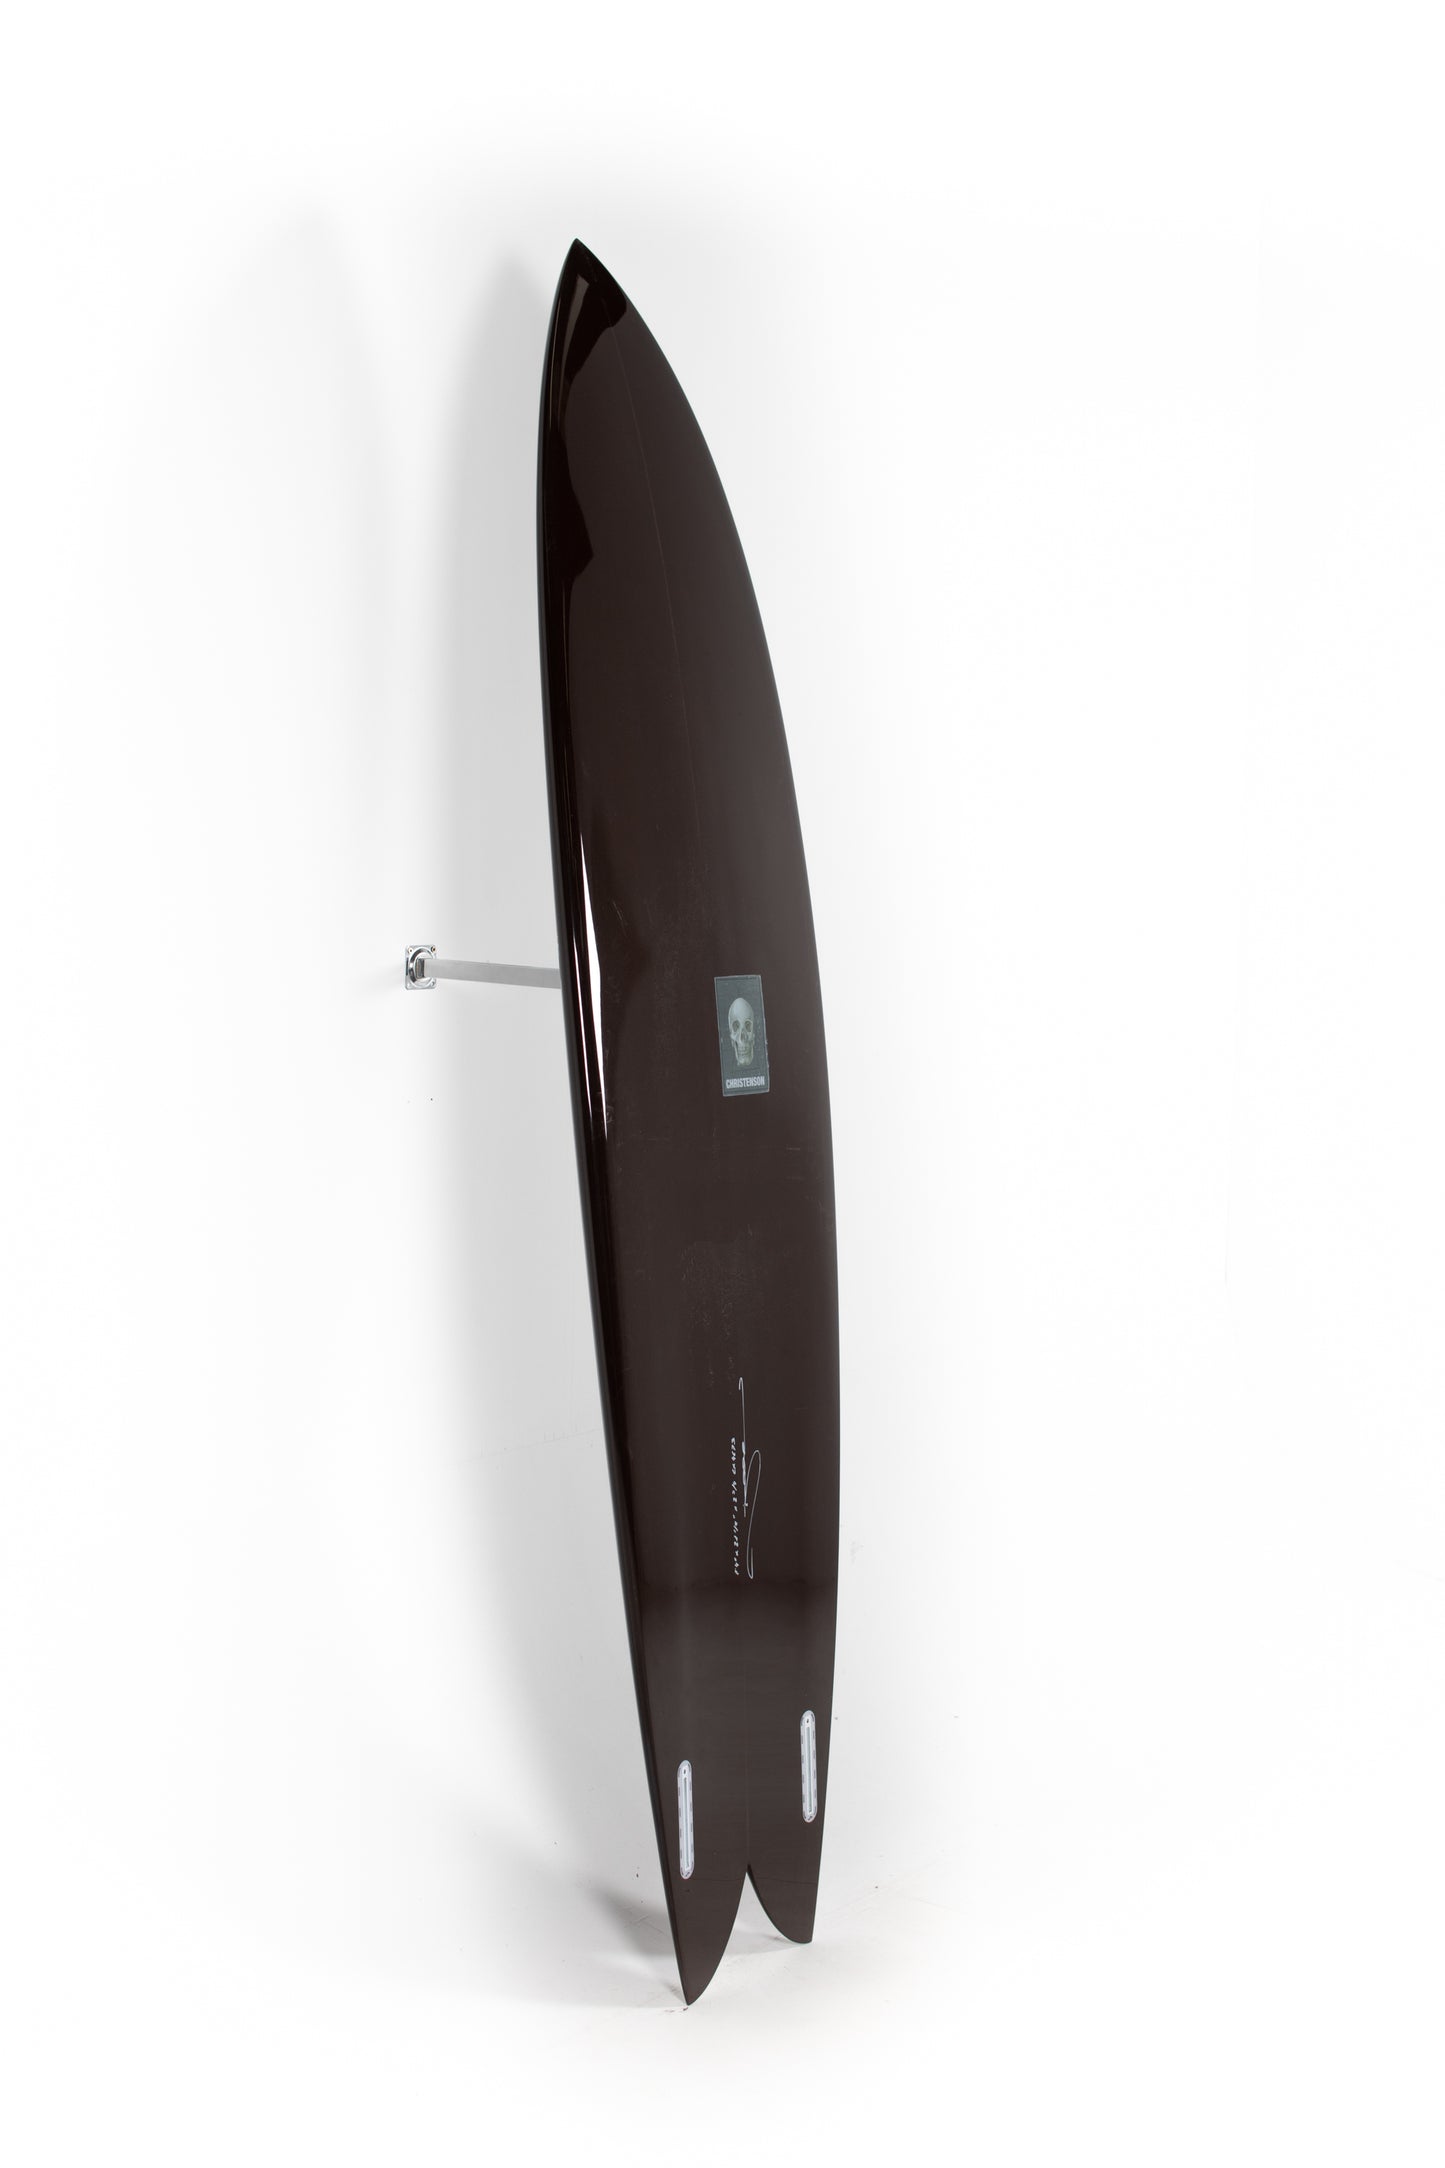 Christenson Surfboards - LONG PHISH - 7'4